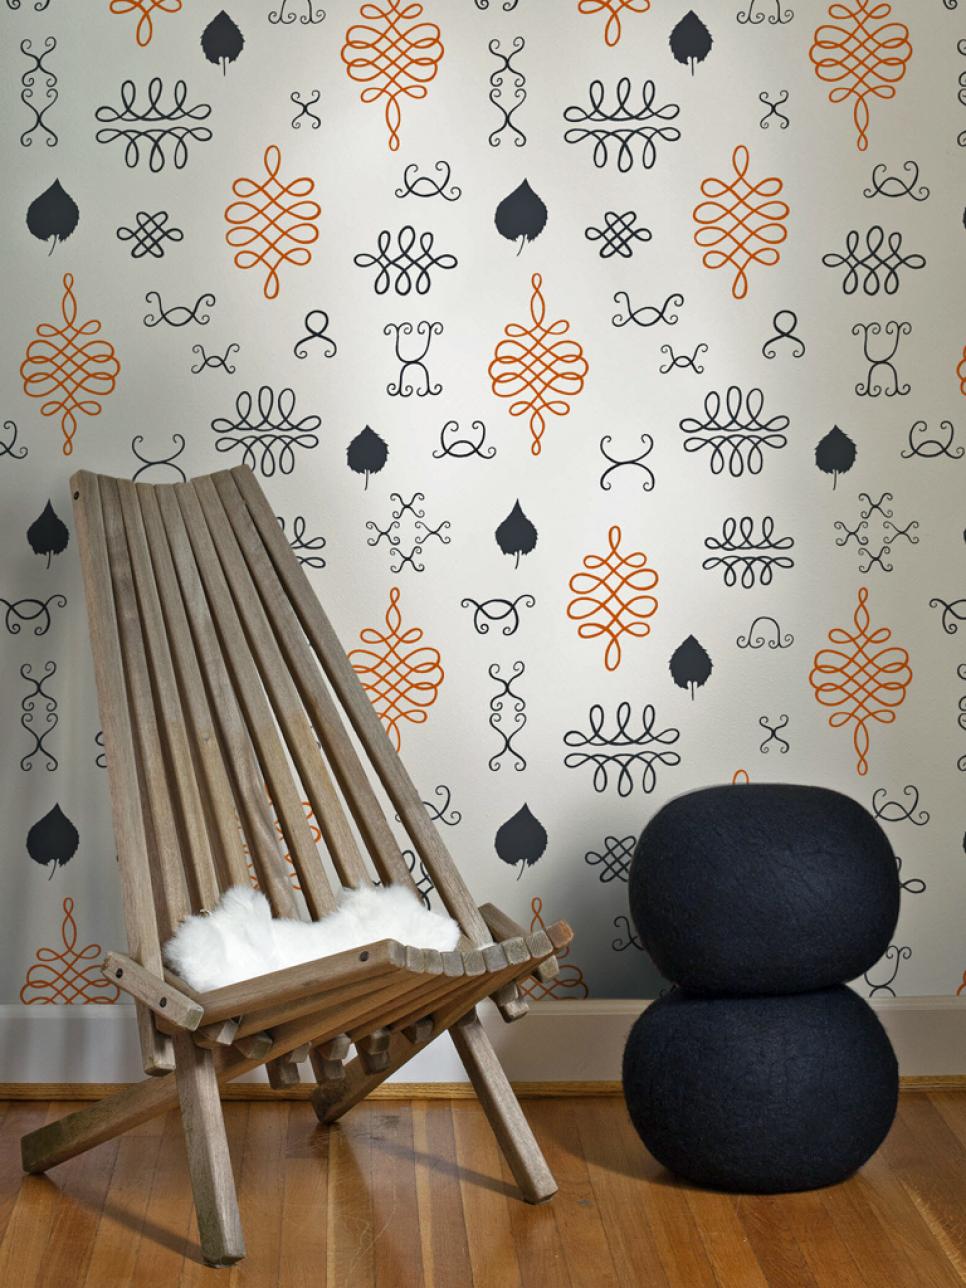 vintage inspired wallpaper,wallpaper,wall,interior design,room,chair